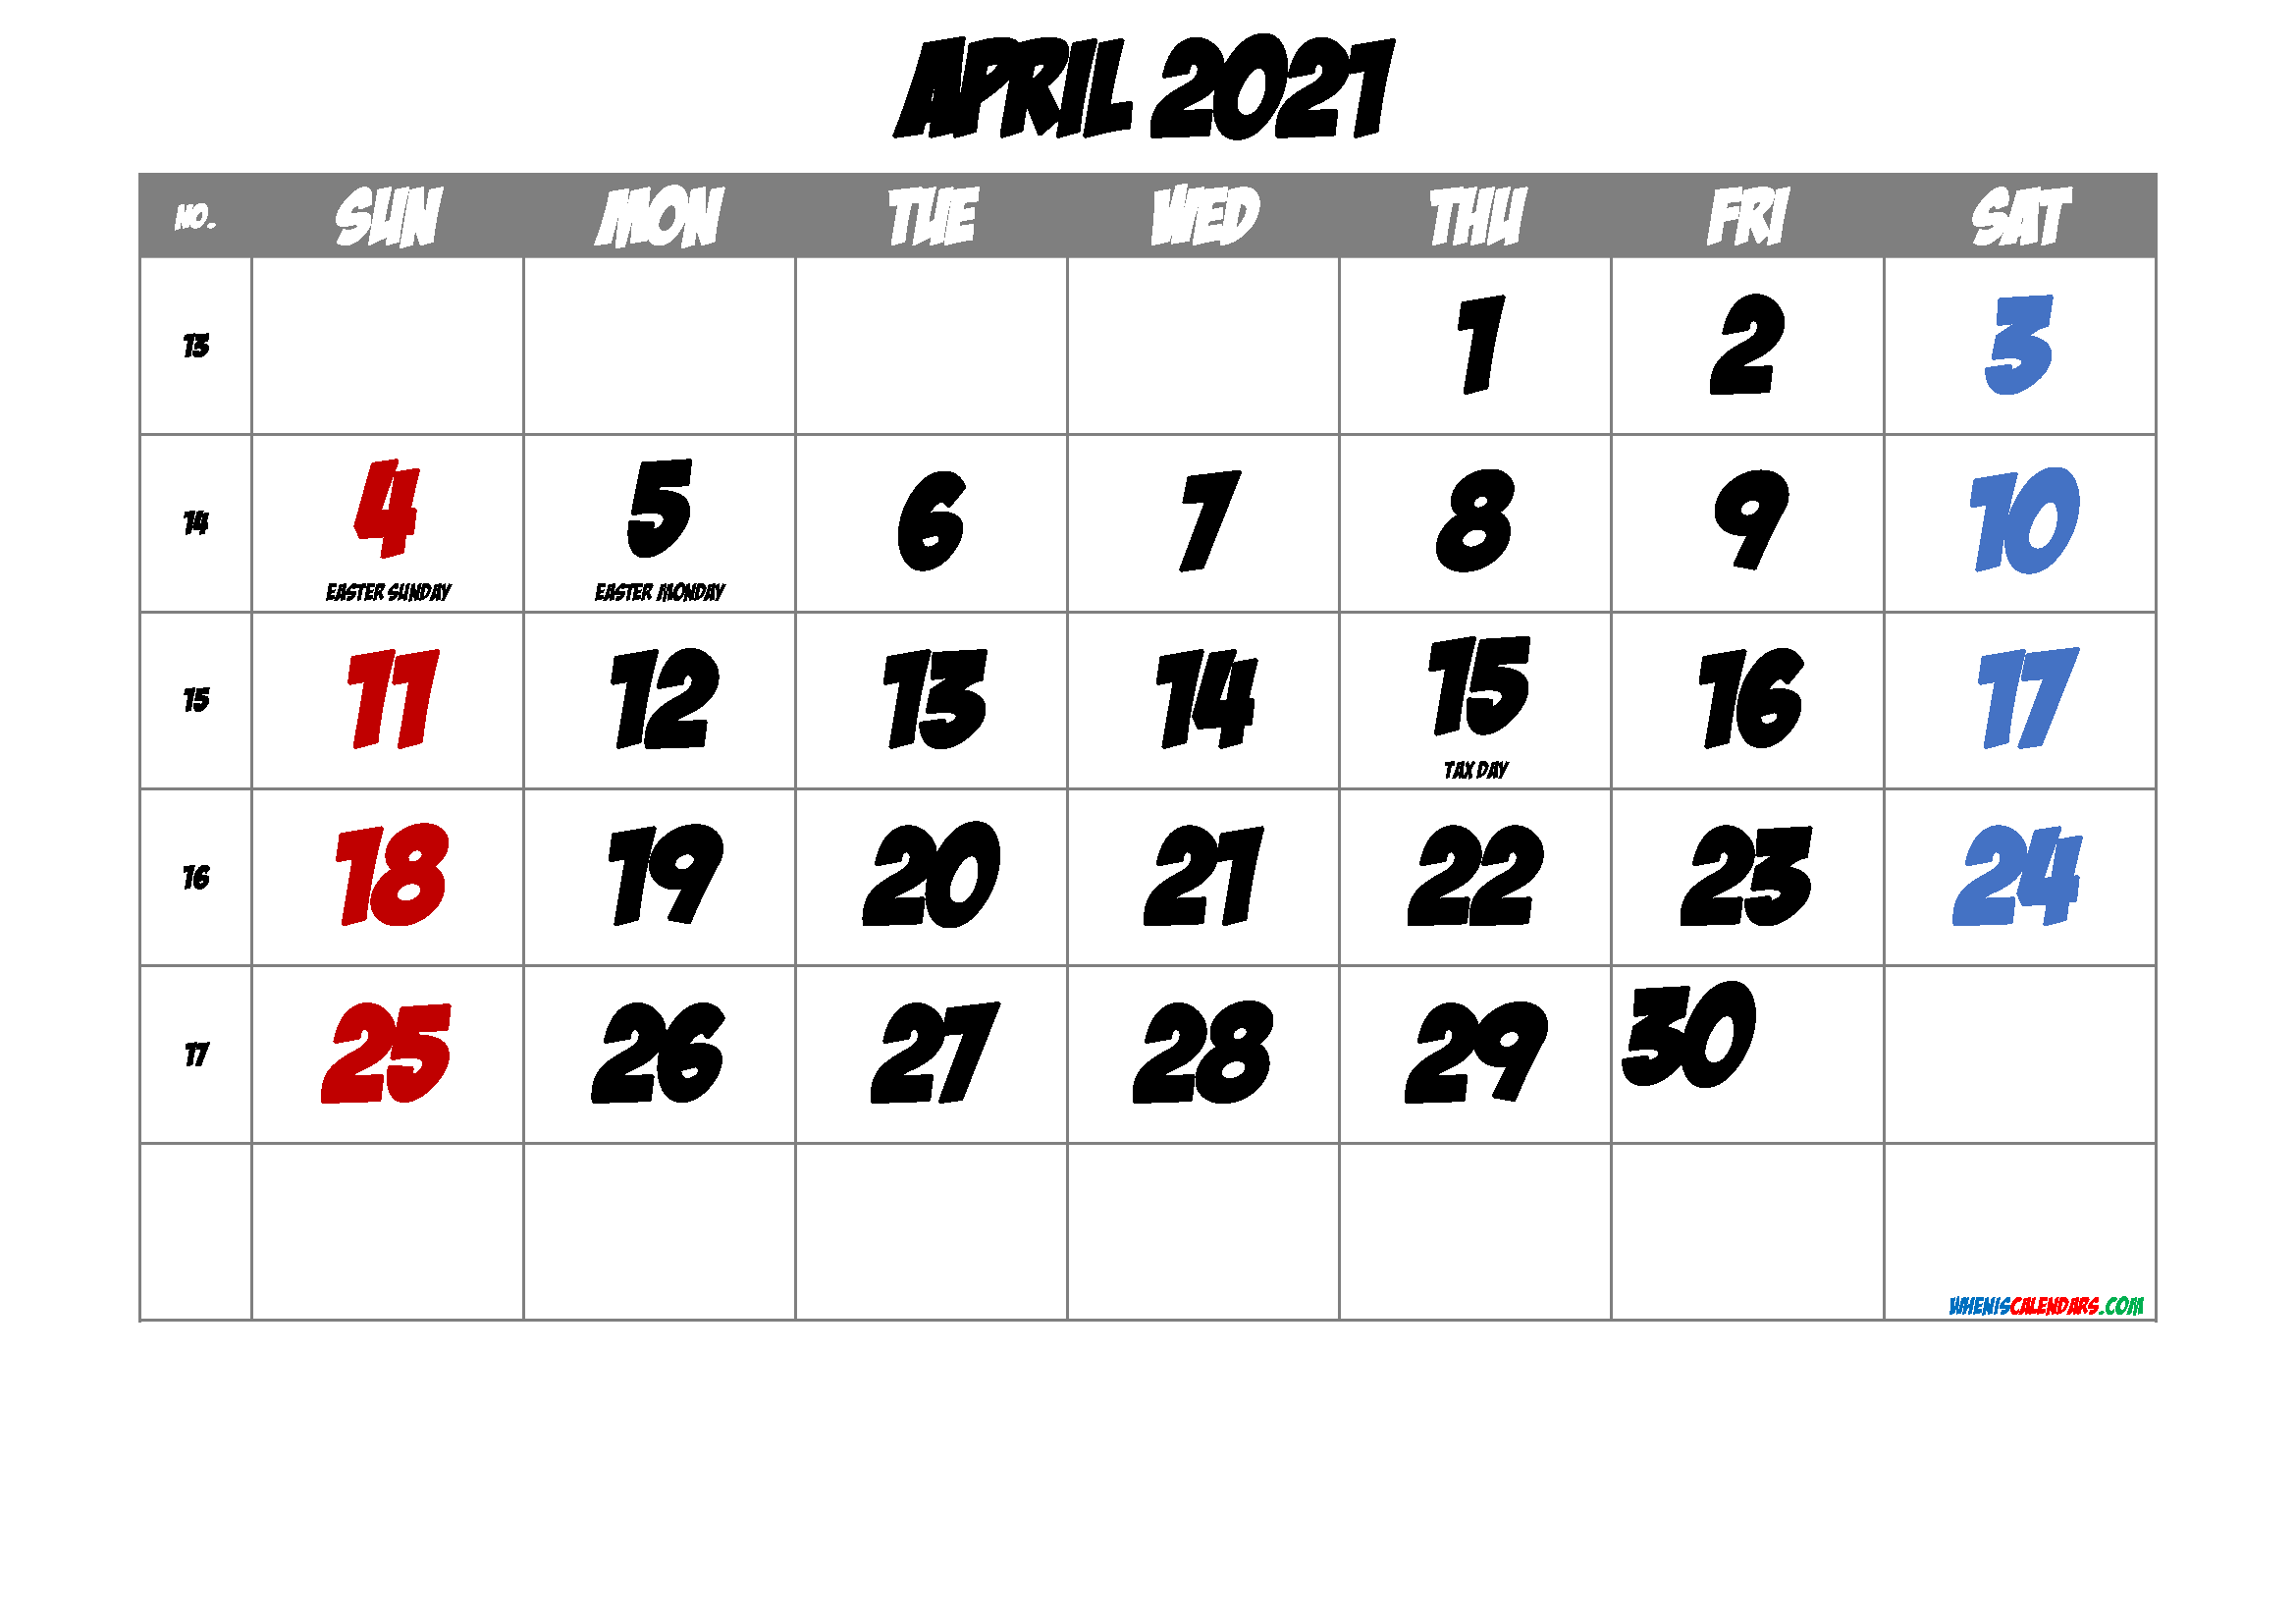 APRIL 2021 Printable Calendar with Holidays